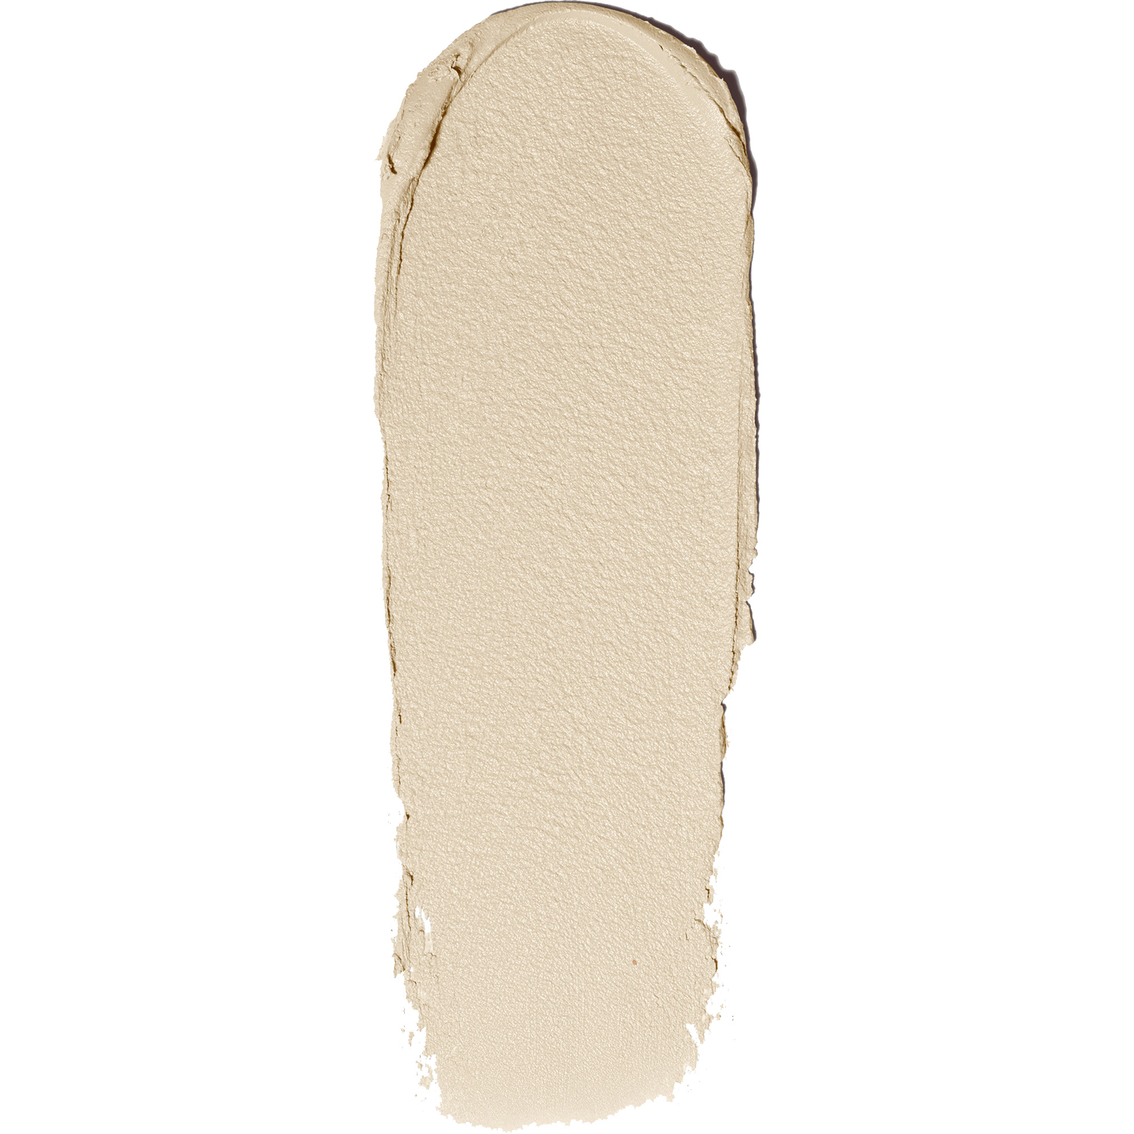 Bobbi Brown Long-Wear Cream Shadow Stick - Image 4 of 5